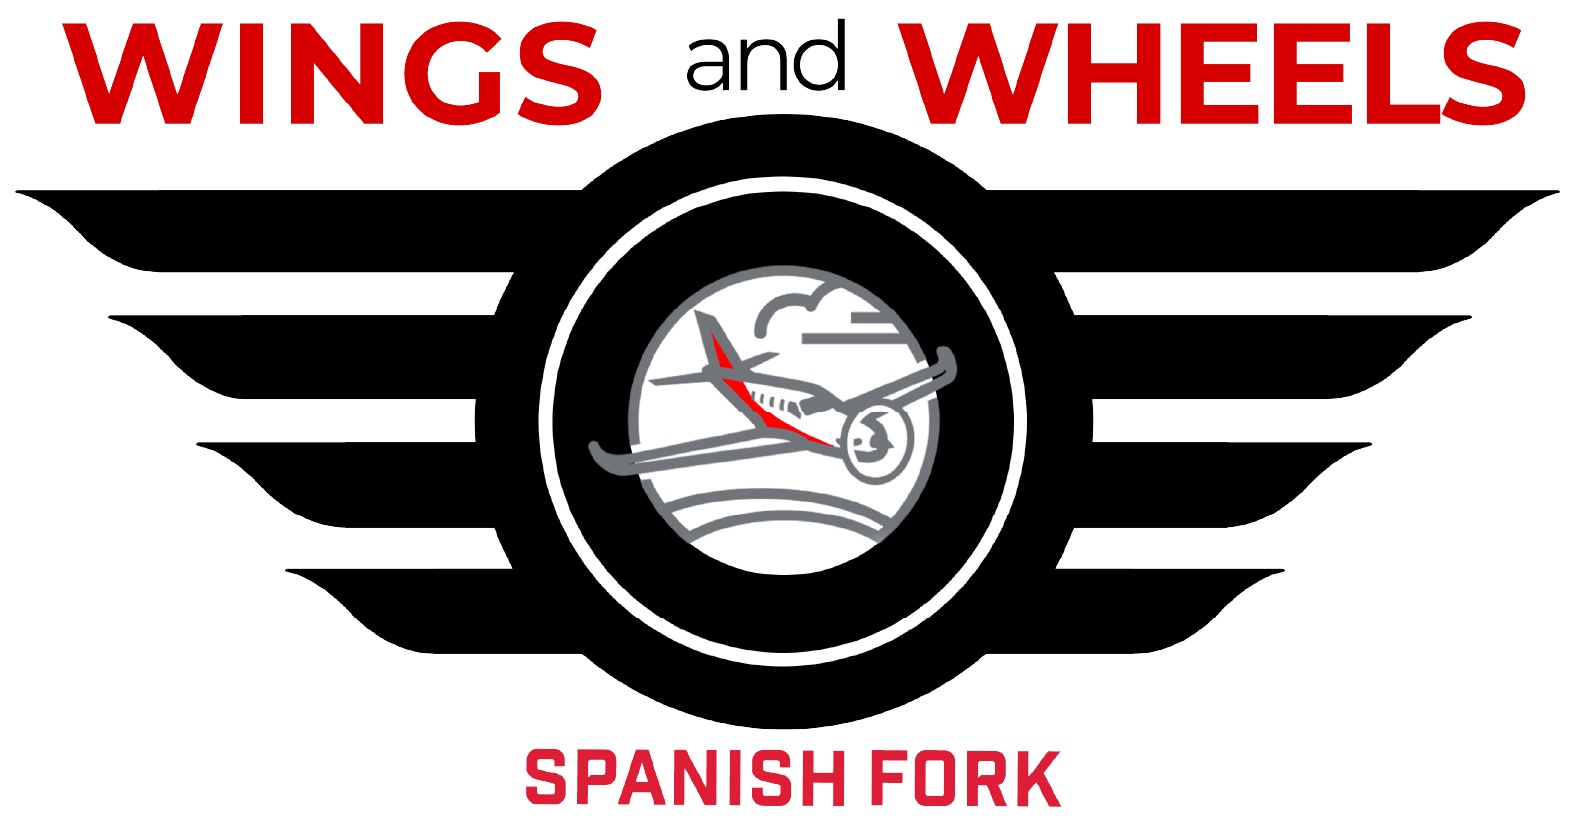 Utah's Festival of Speed - Wings and Wheels - Spanish Fork